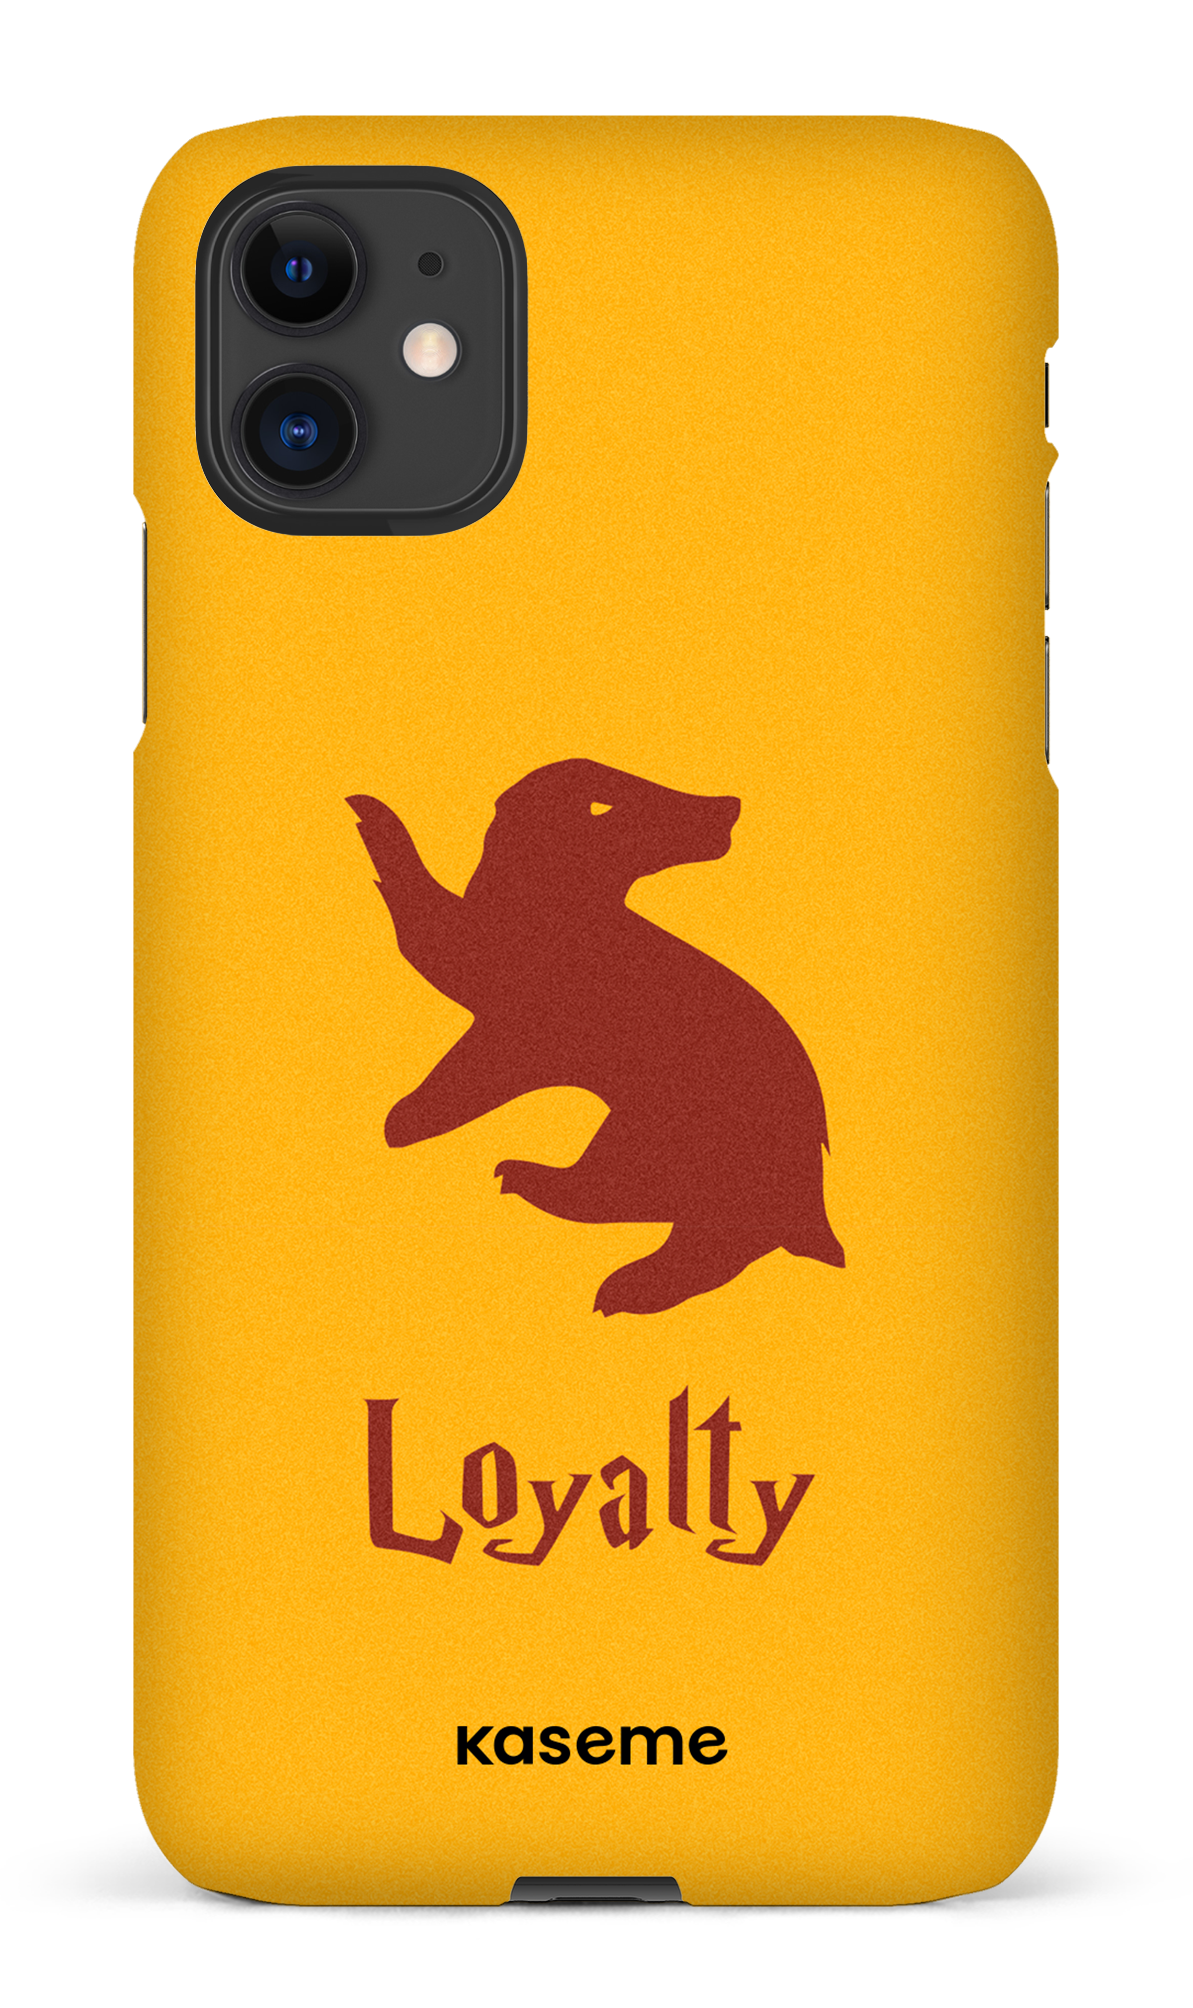 Loyalty - iPhone 11